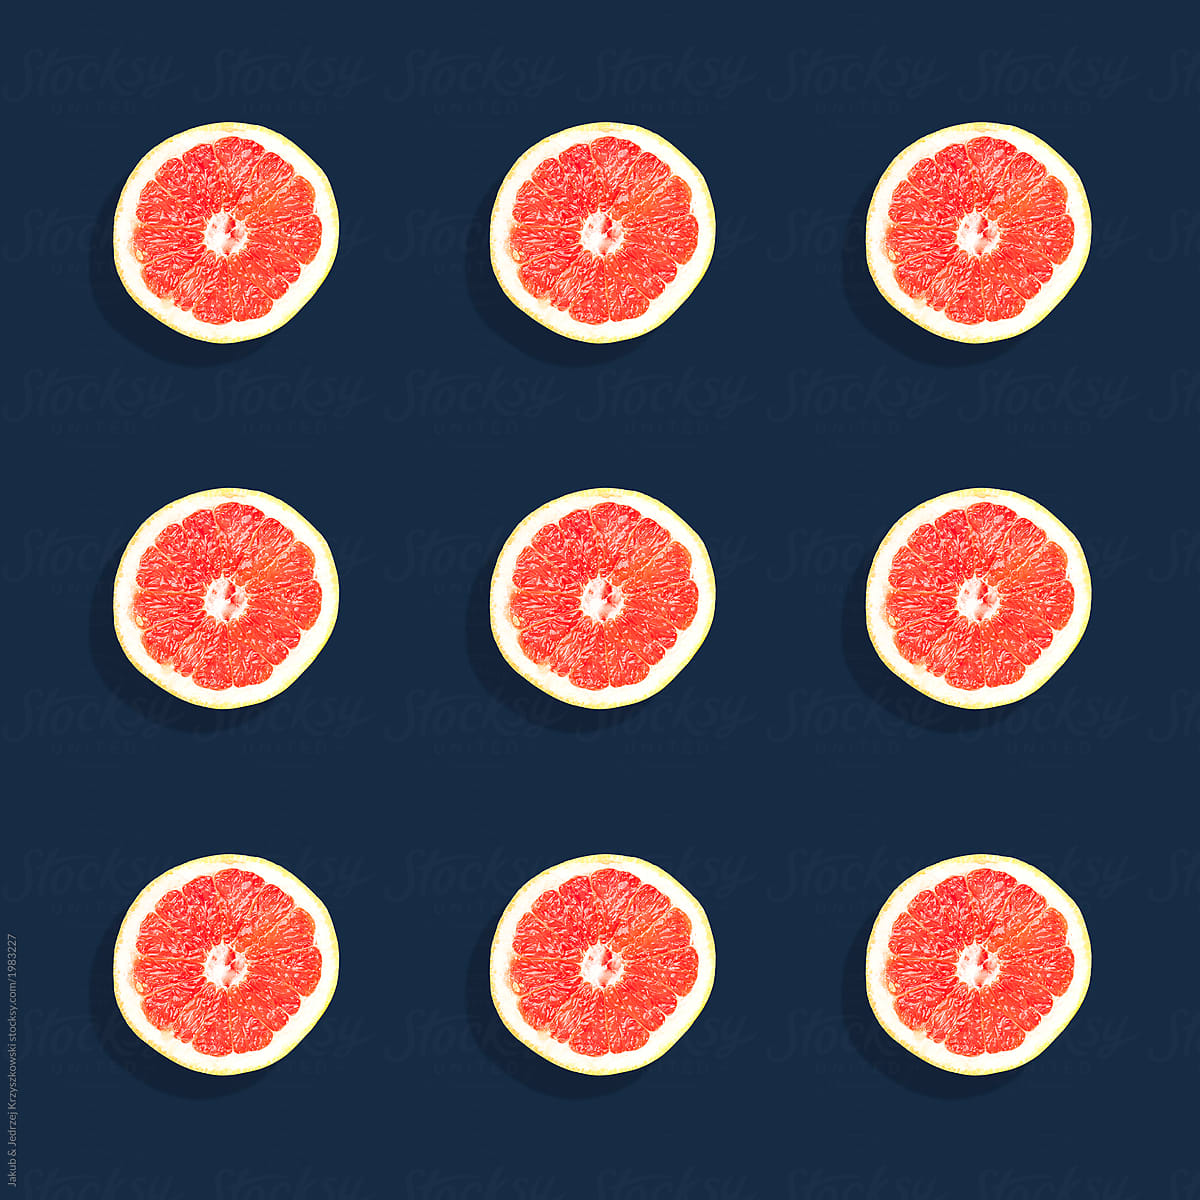 Pattern made of 9 Grapefruits on Dark Navy Background